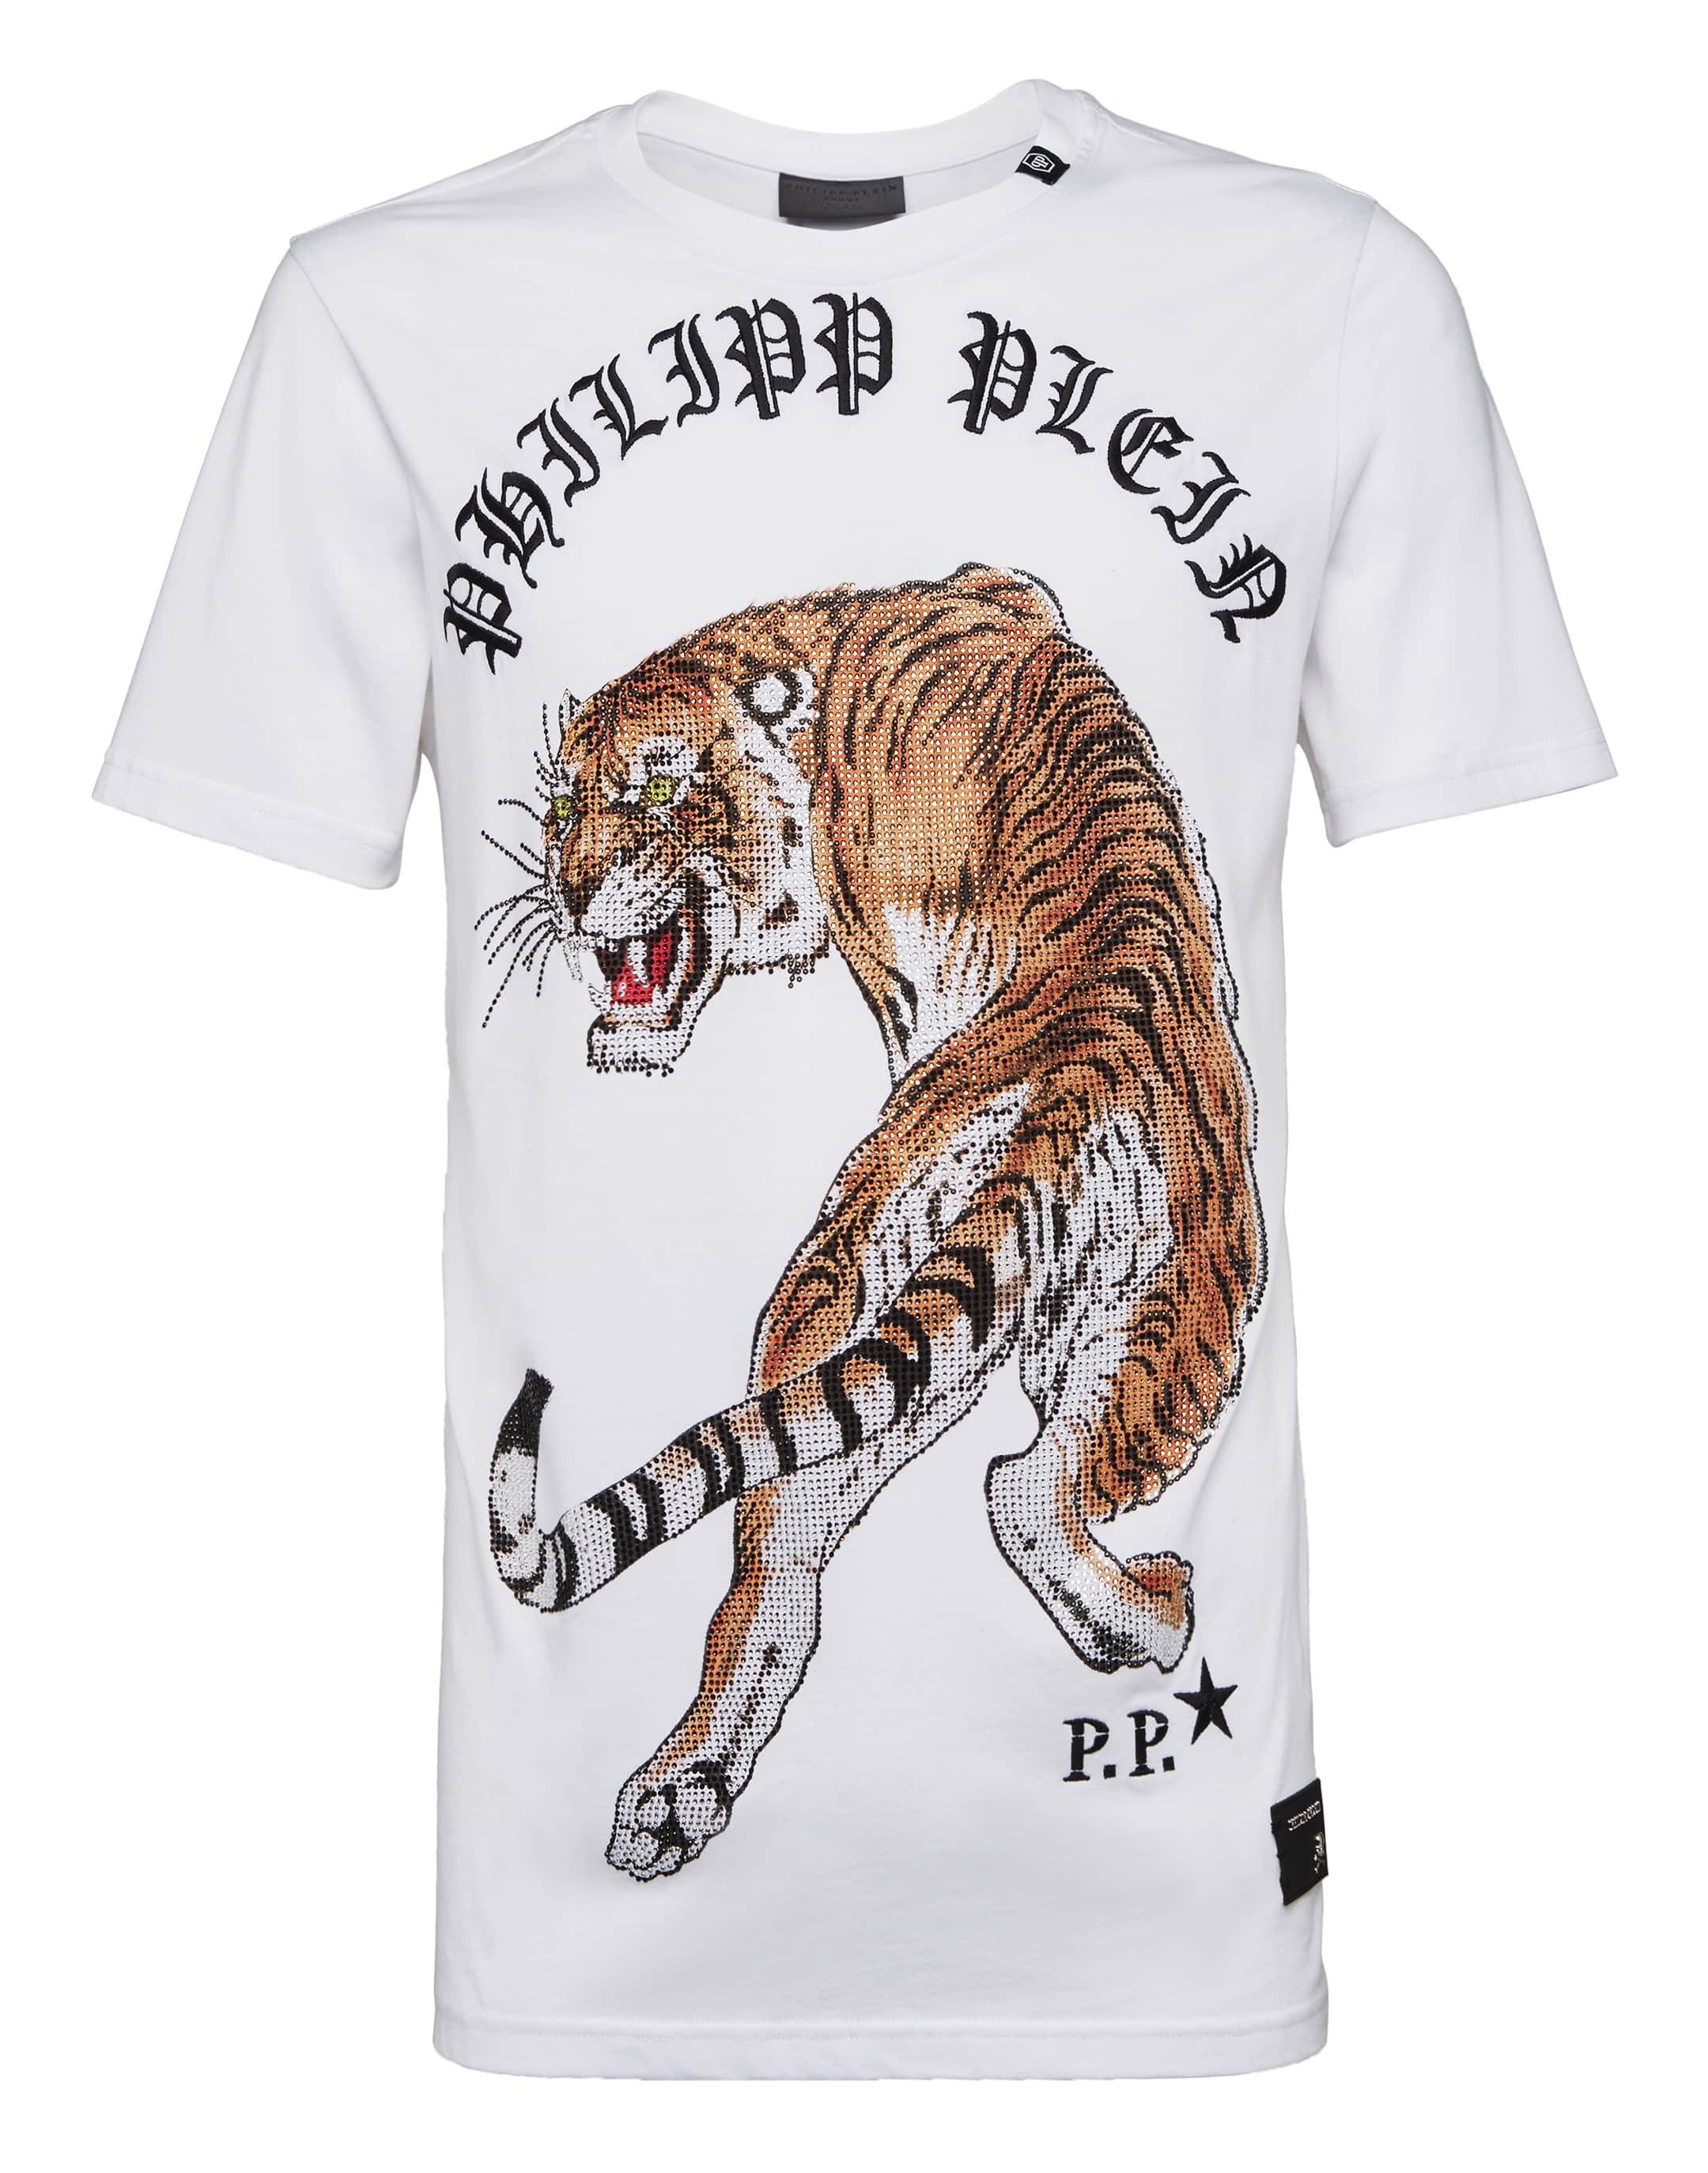 philipp plein t shirt tiger